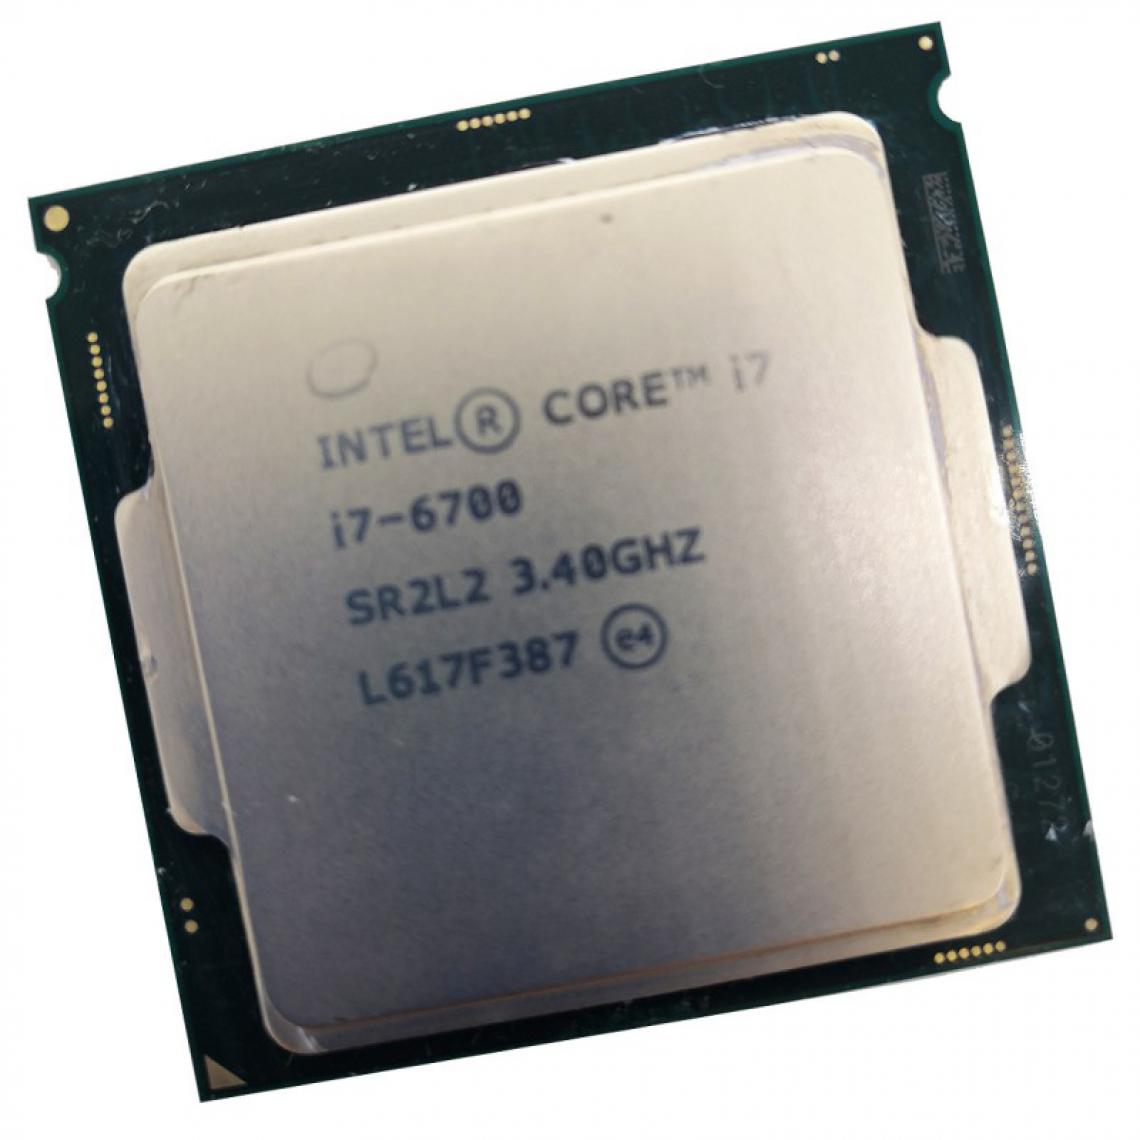 Intel - Processeur CPU Intel Core i7-6700 3,40Ghz SR2L2 LGA1151 6Mo 8GT/s - Processeur INTEL